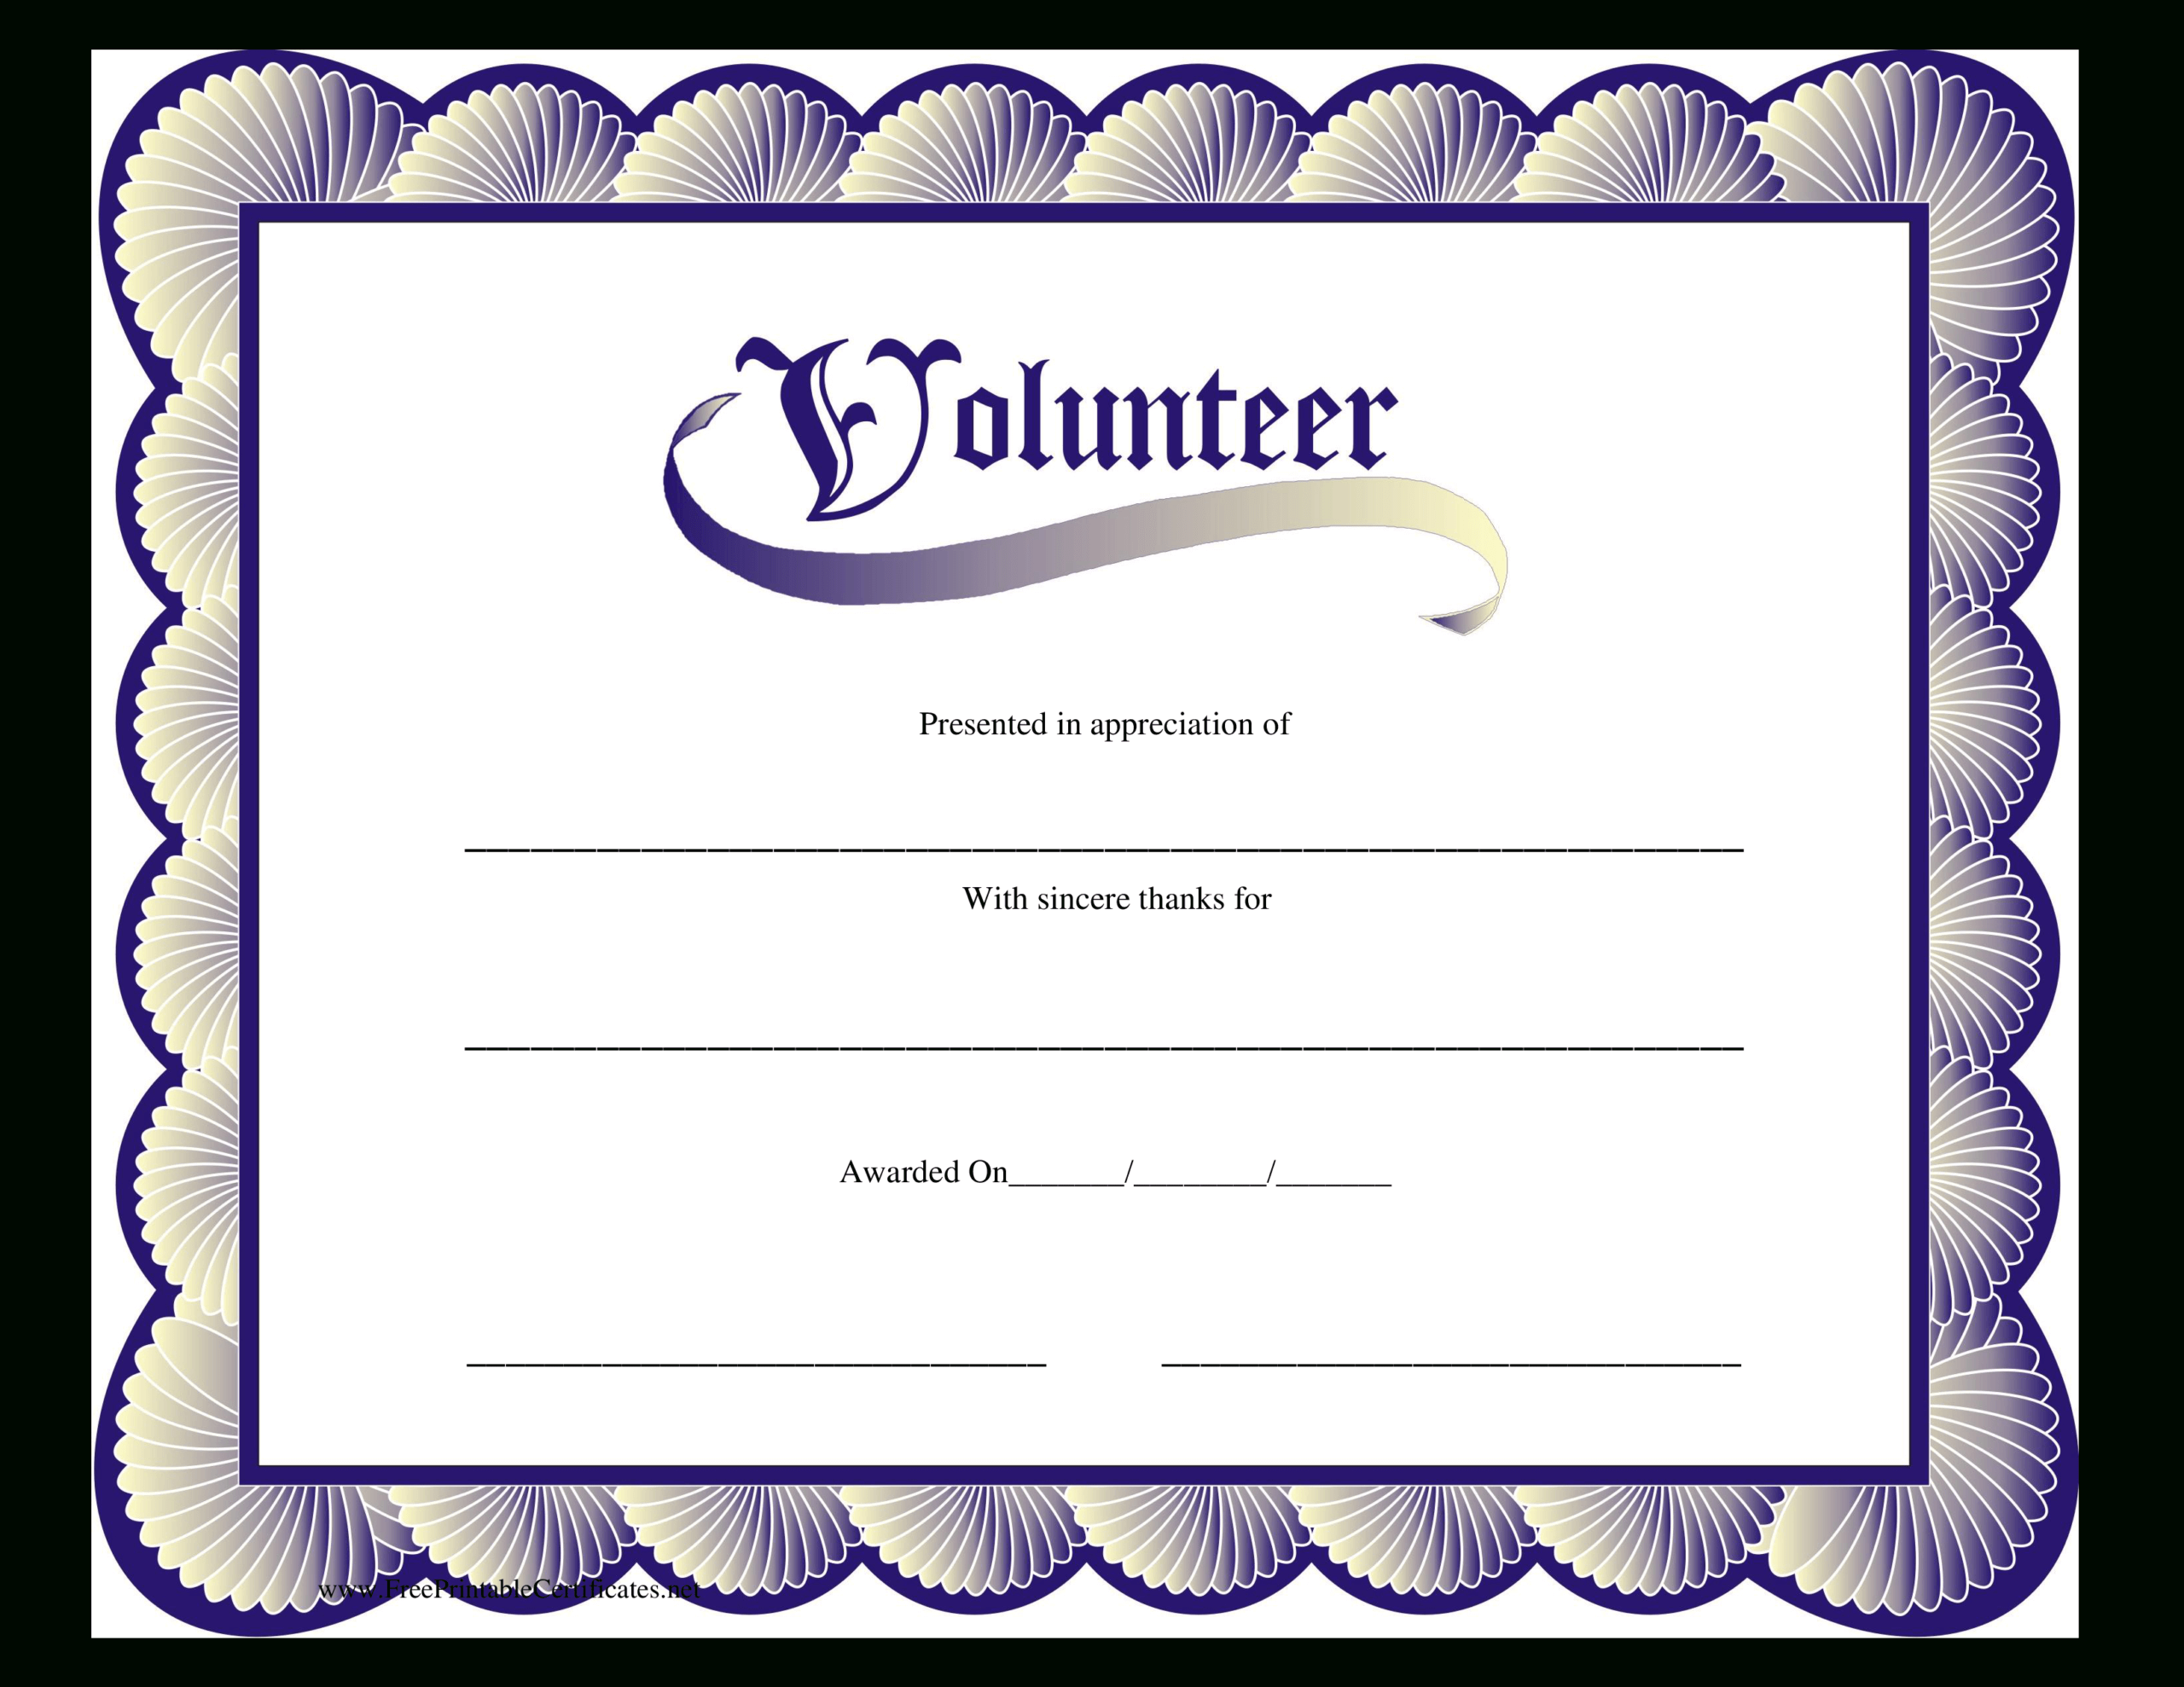 Volunteer Certificate | Templates At Allbusinesstemplates Within Volunteer Award Certificate Template